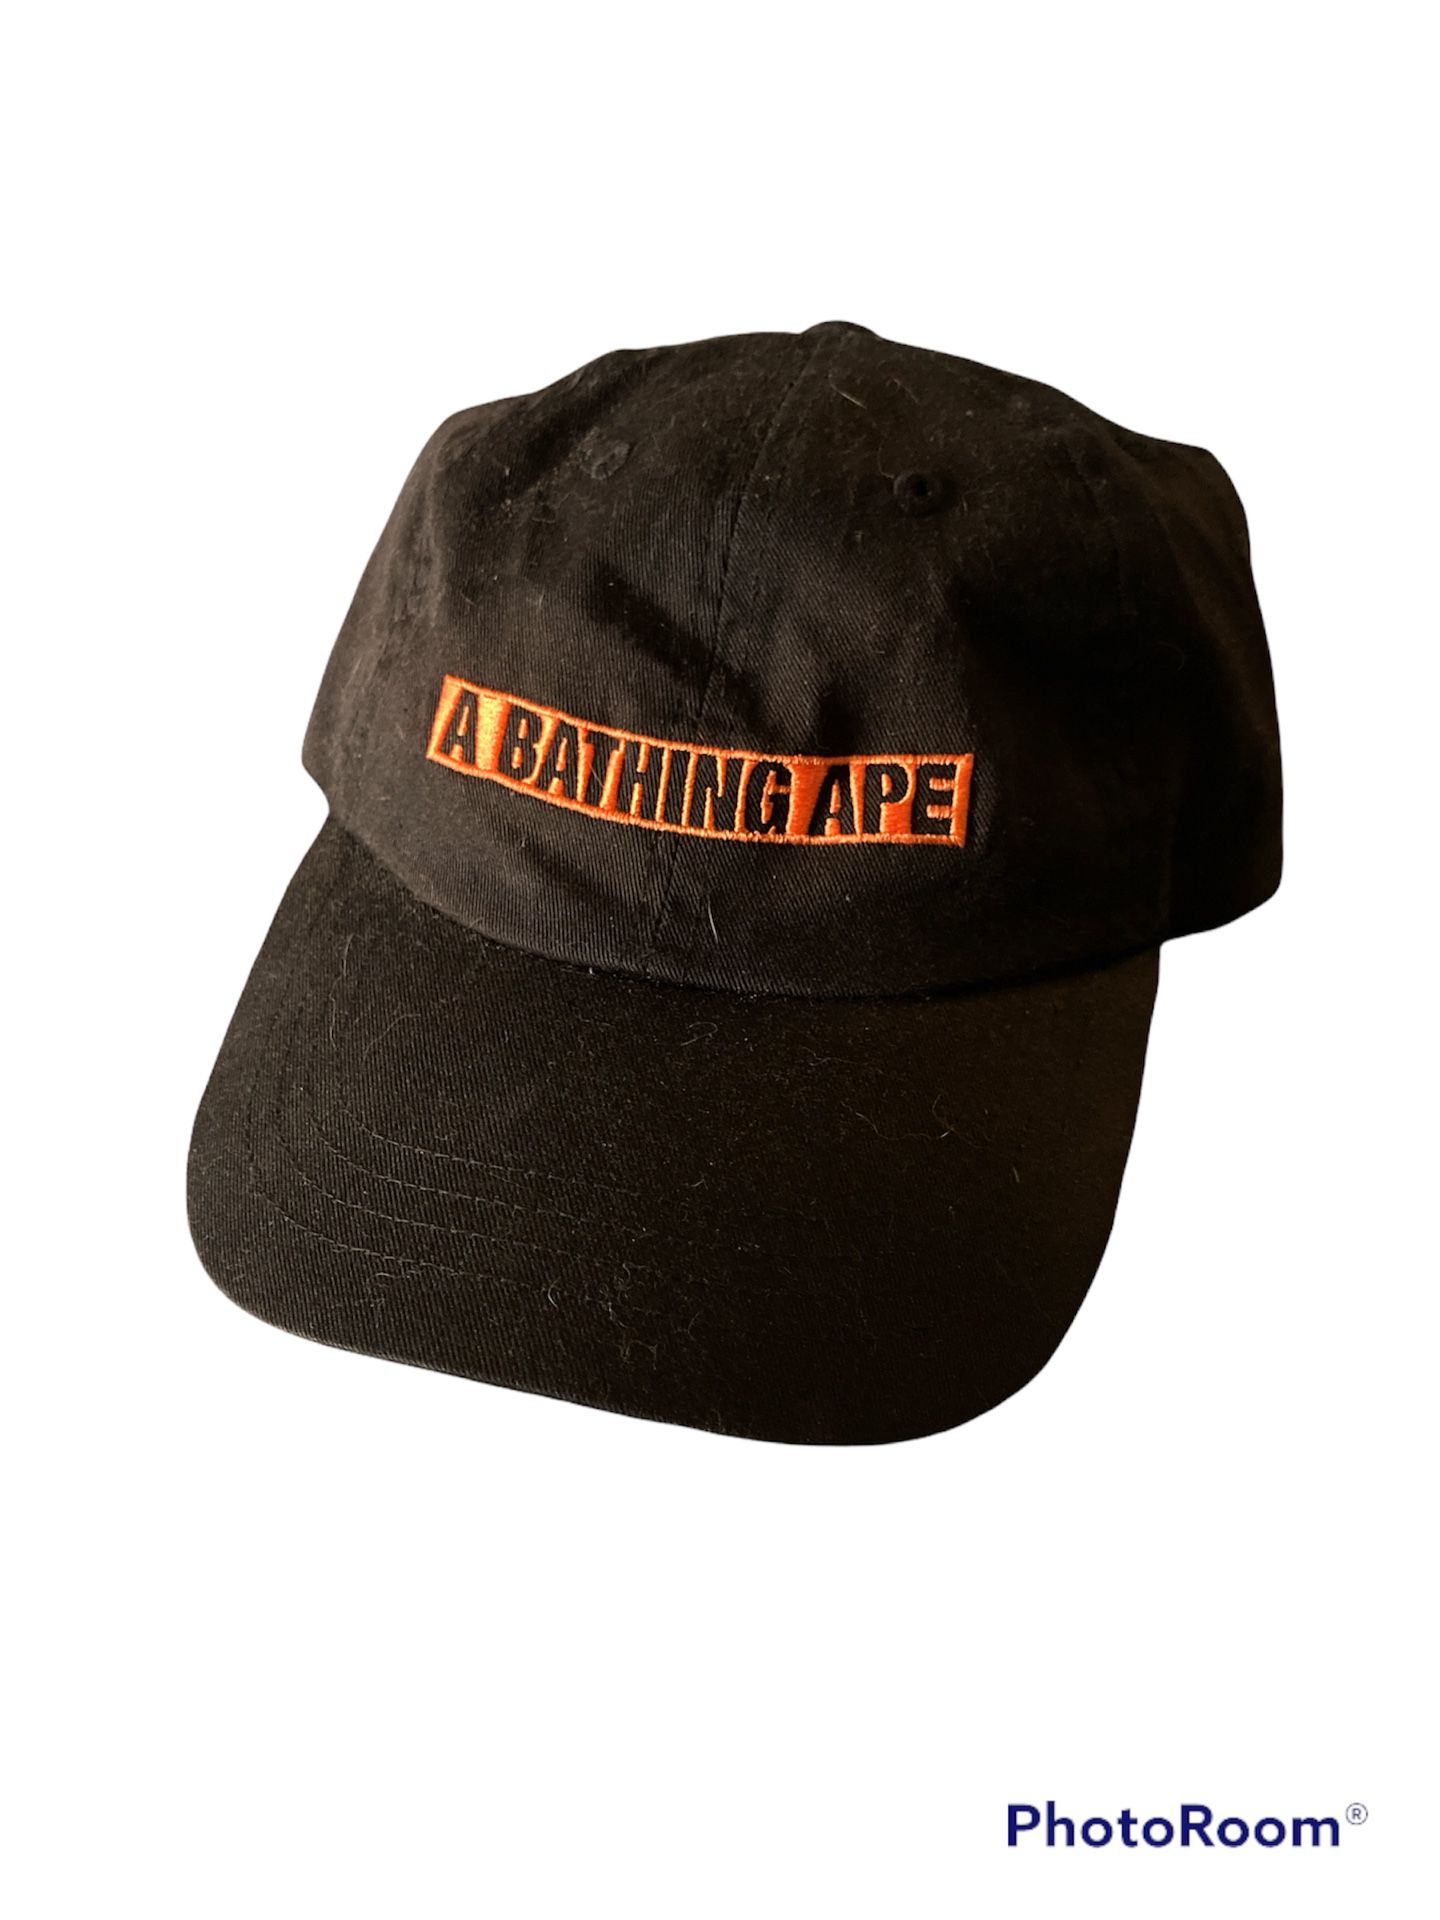 A Bathing Ape Strap back Hat 